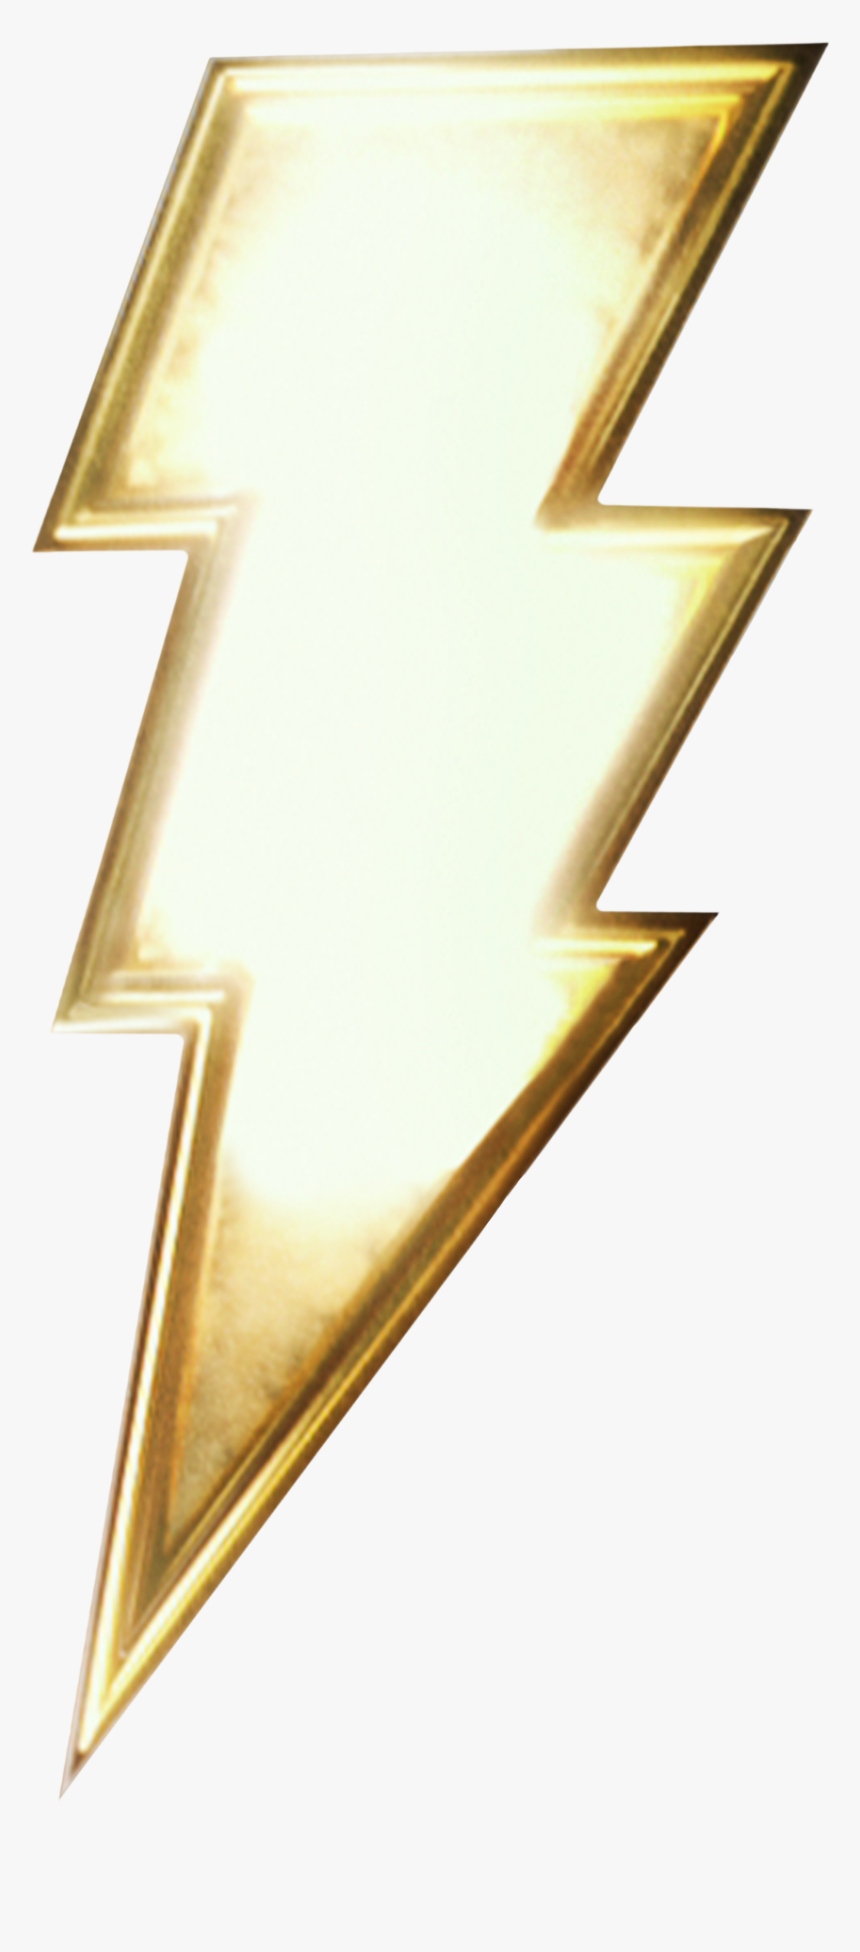 Logo: Shazam! Movie | Dc By 4